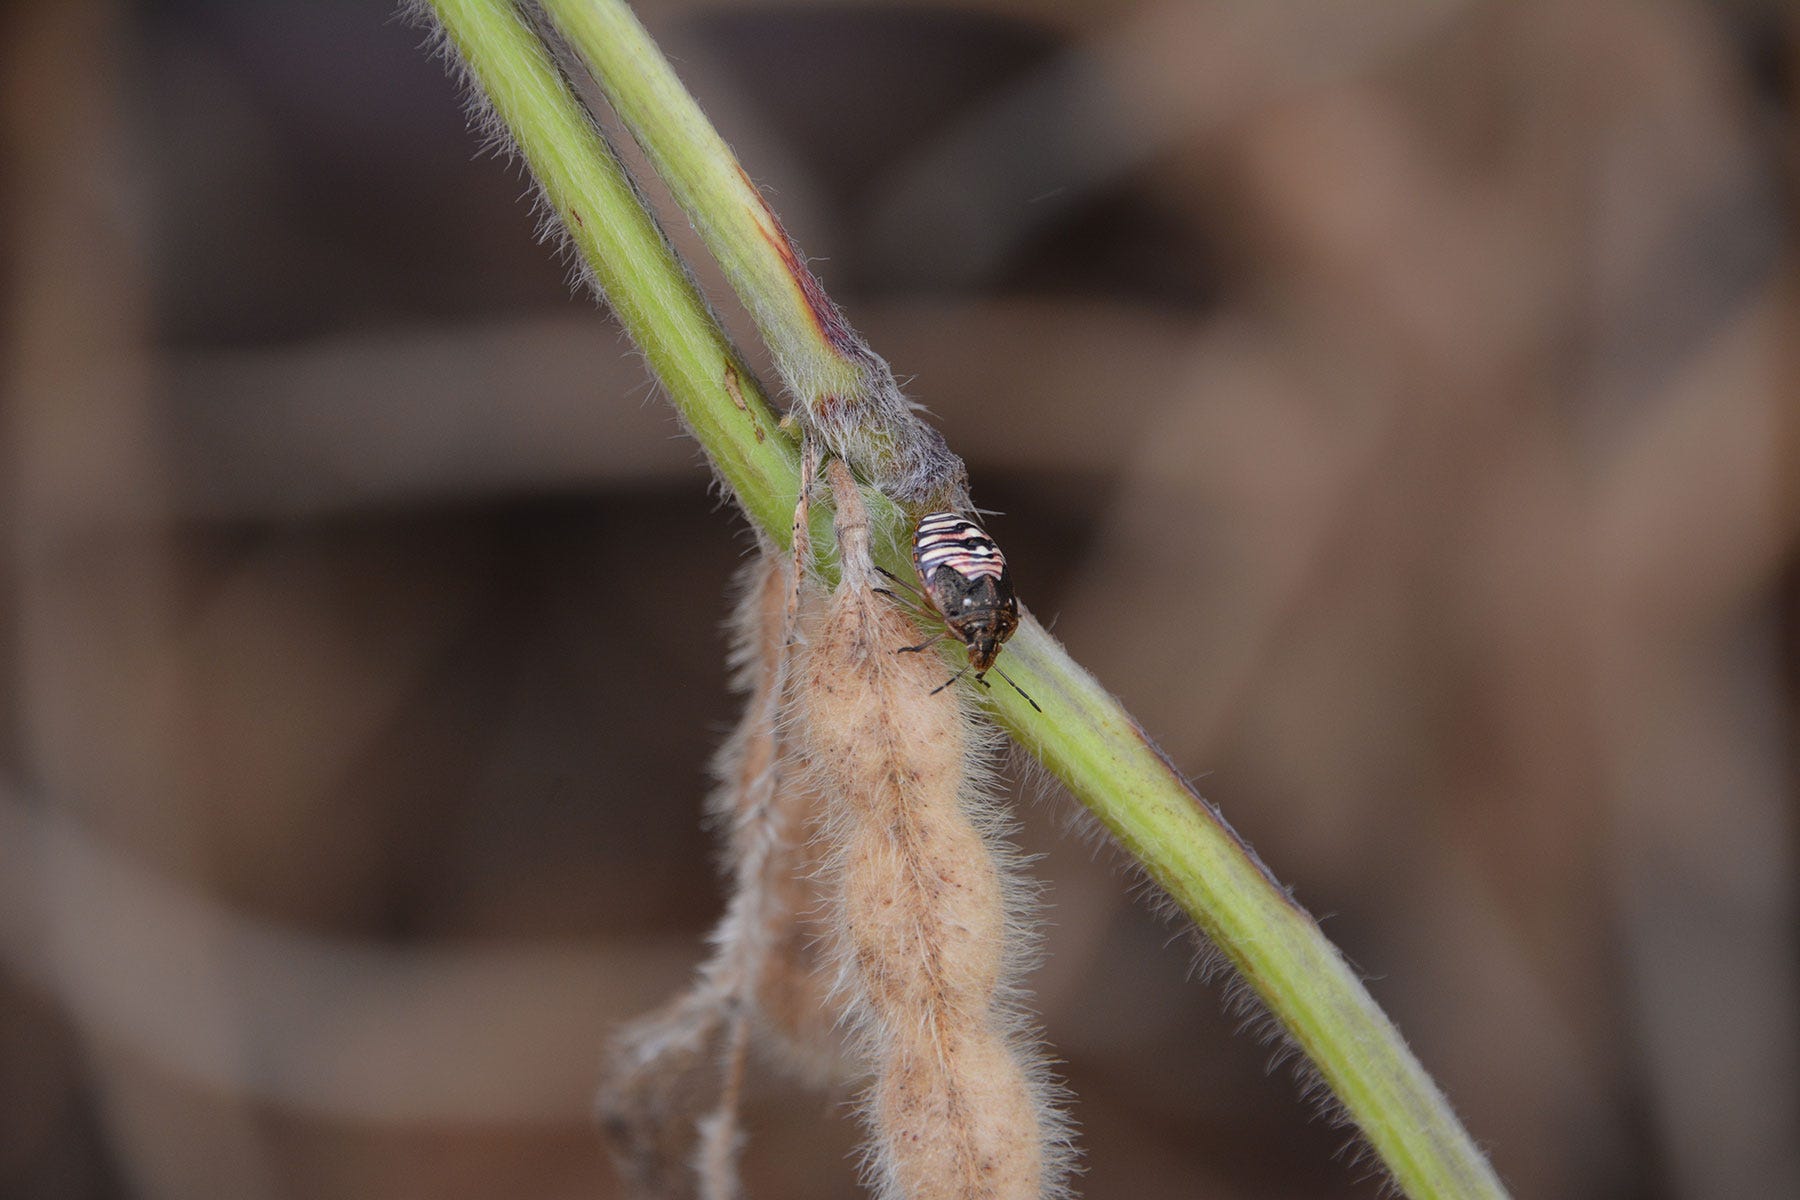 a stinkbug piercing a soybean pod